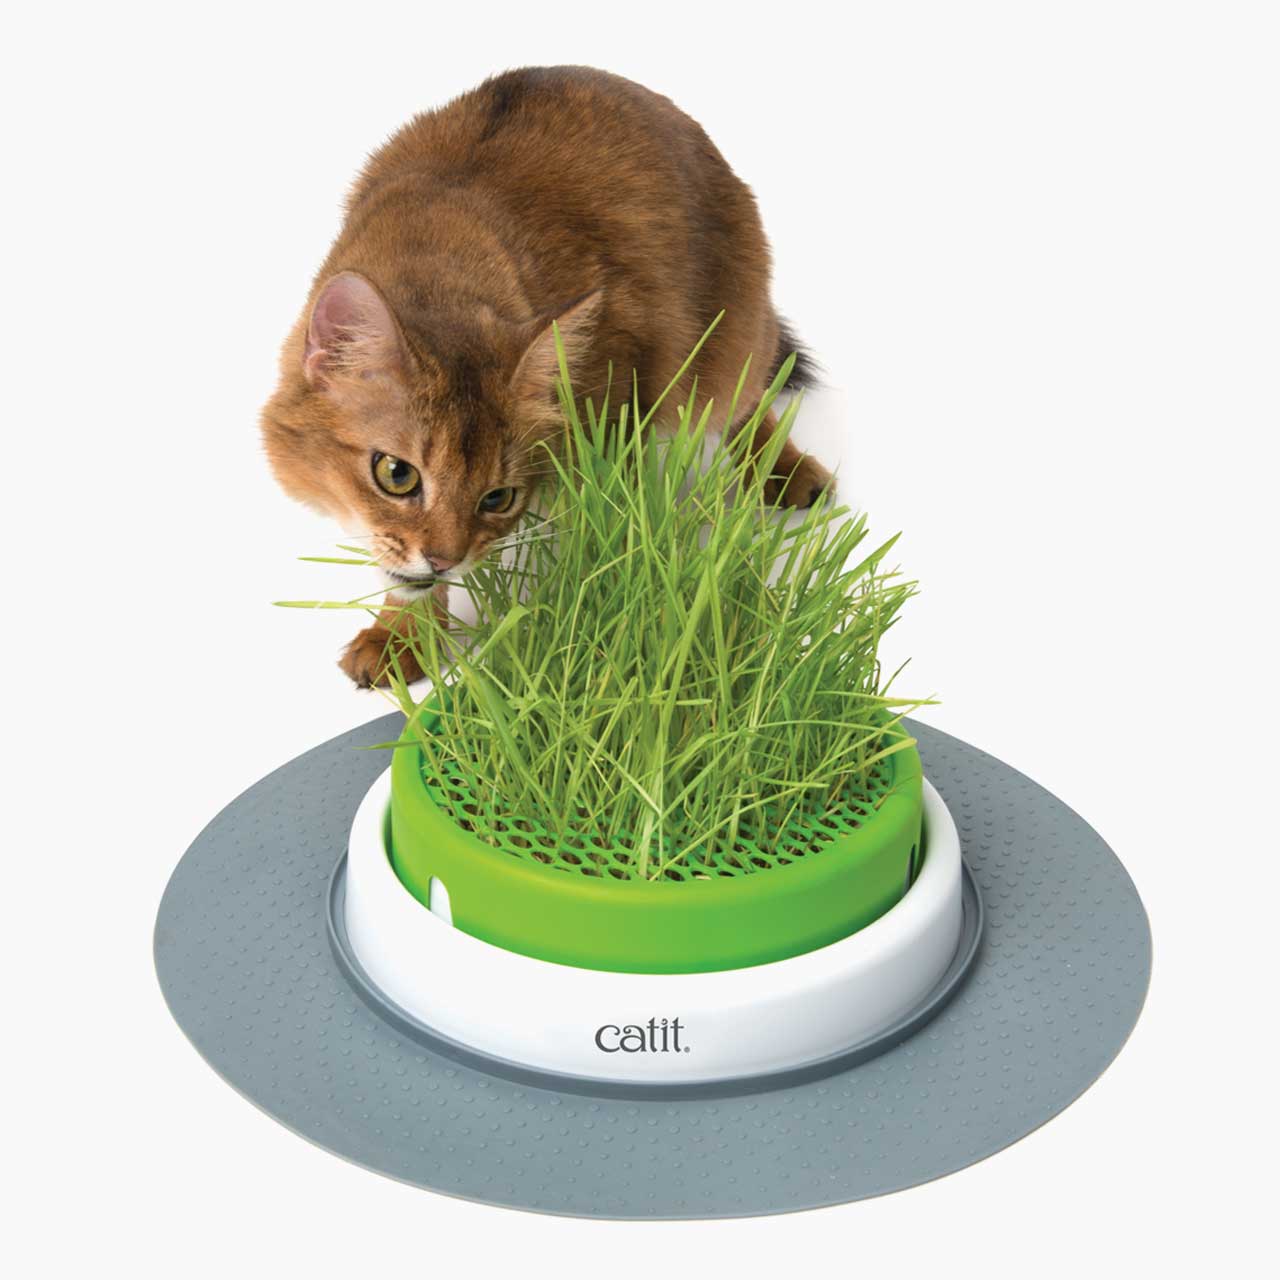 Kat kauwt gras van Grass Planter